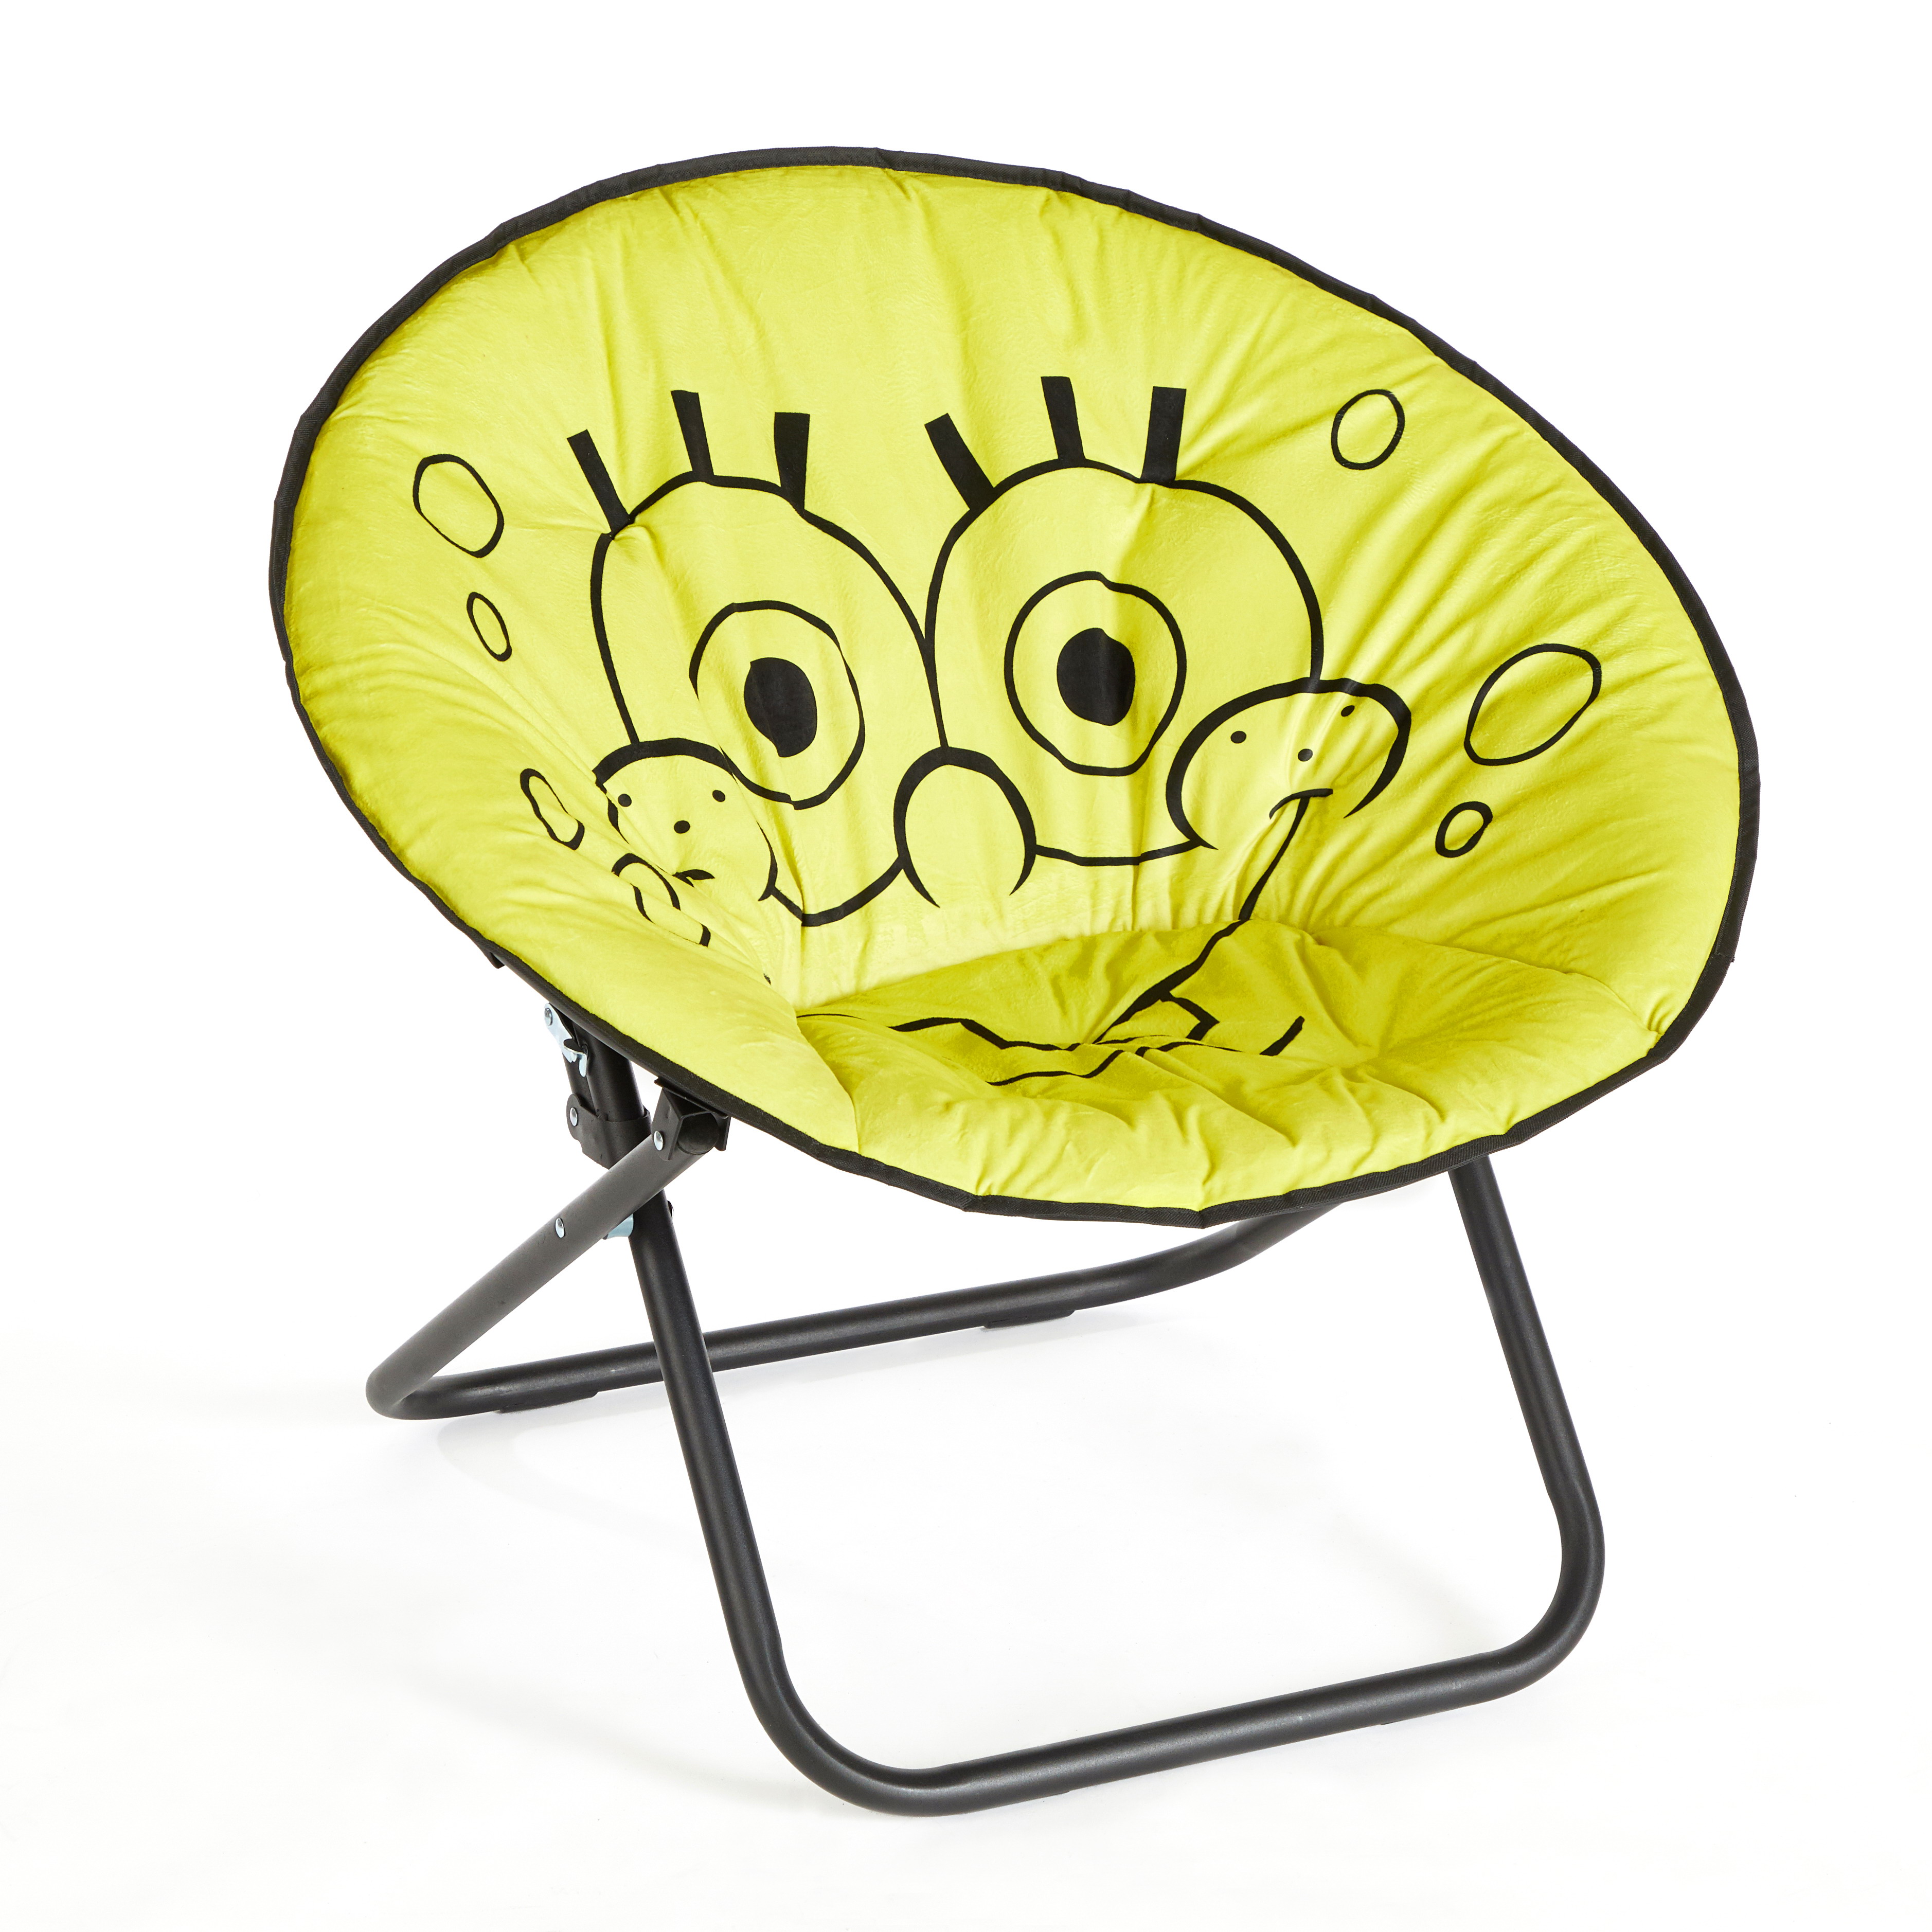 Nickelodeon Spongebob Squarepants 30" Oversized Folding Saucer Chair, Yellow - image 3 of 6